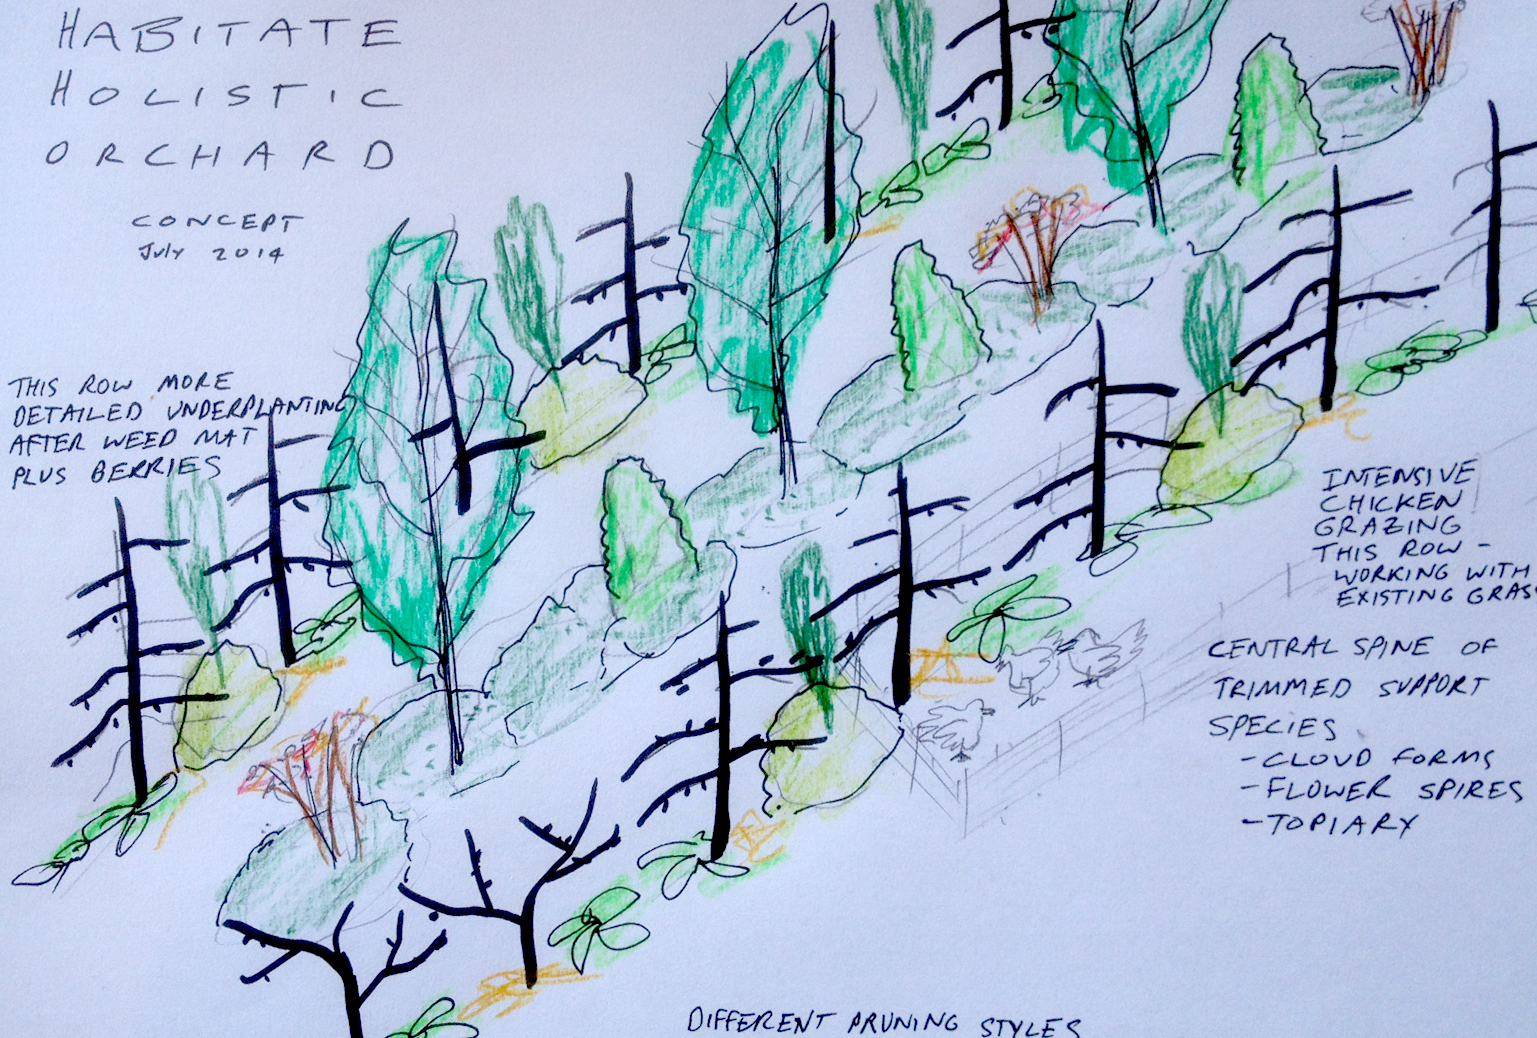 Habitate Holistic Orchard Concept Plan.